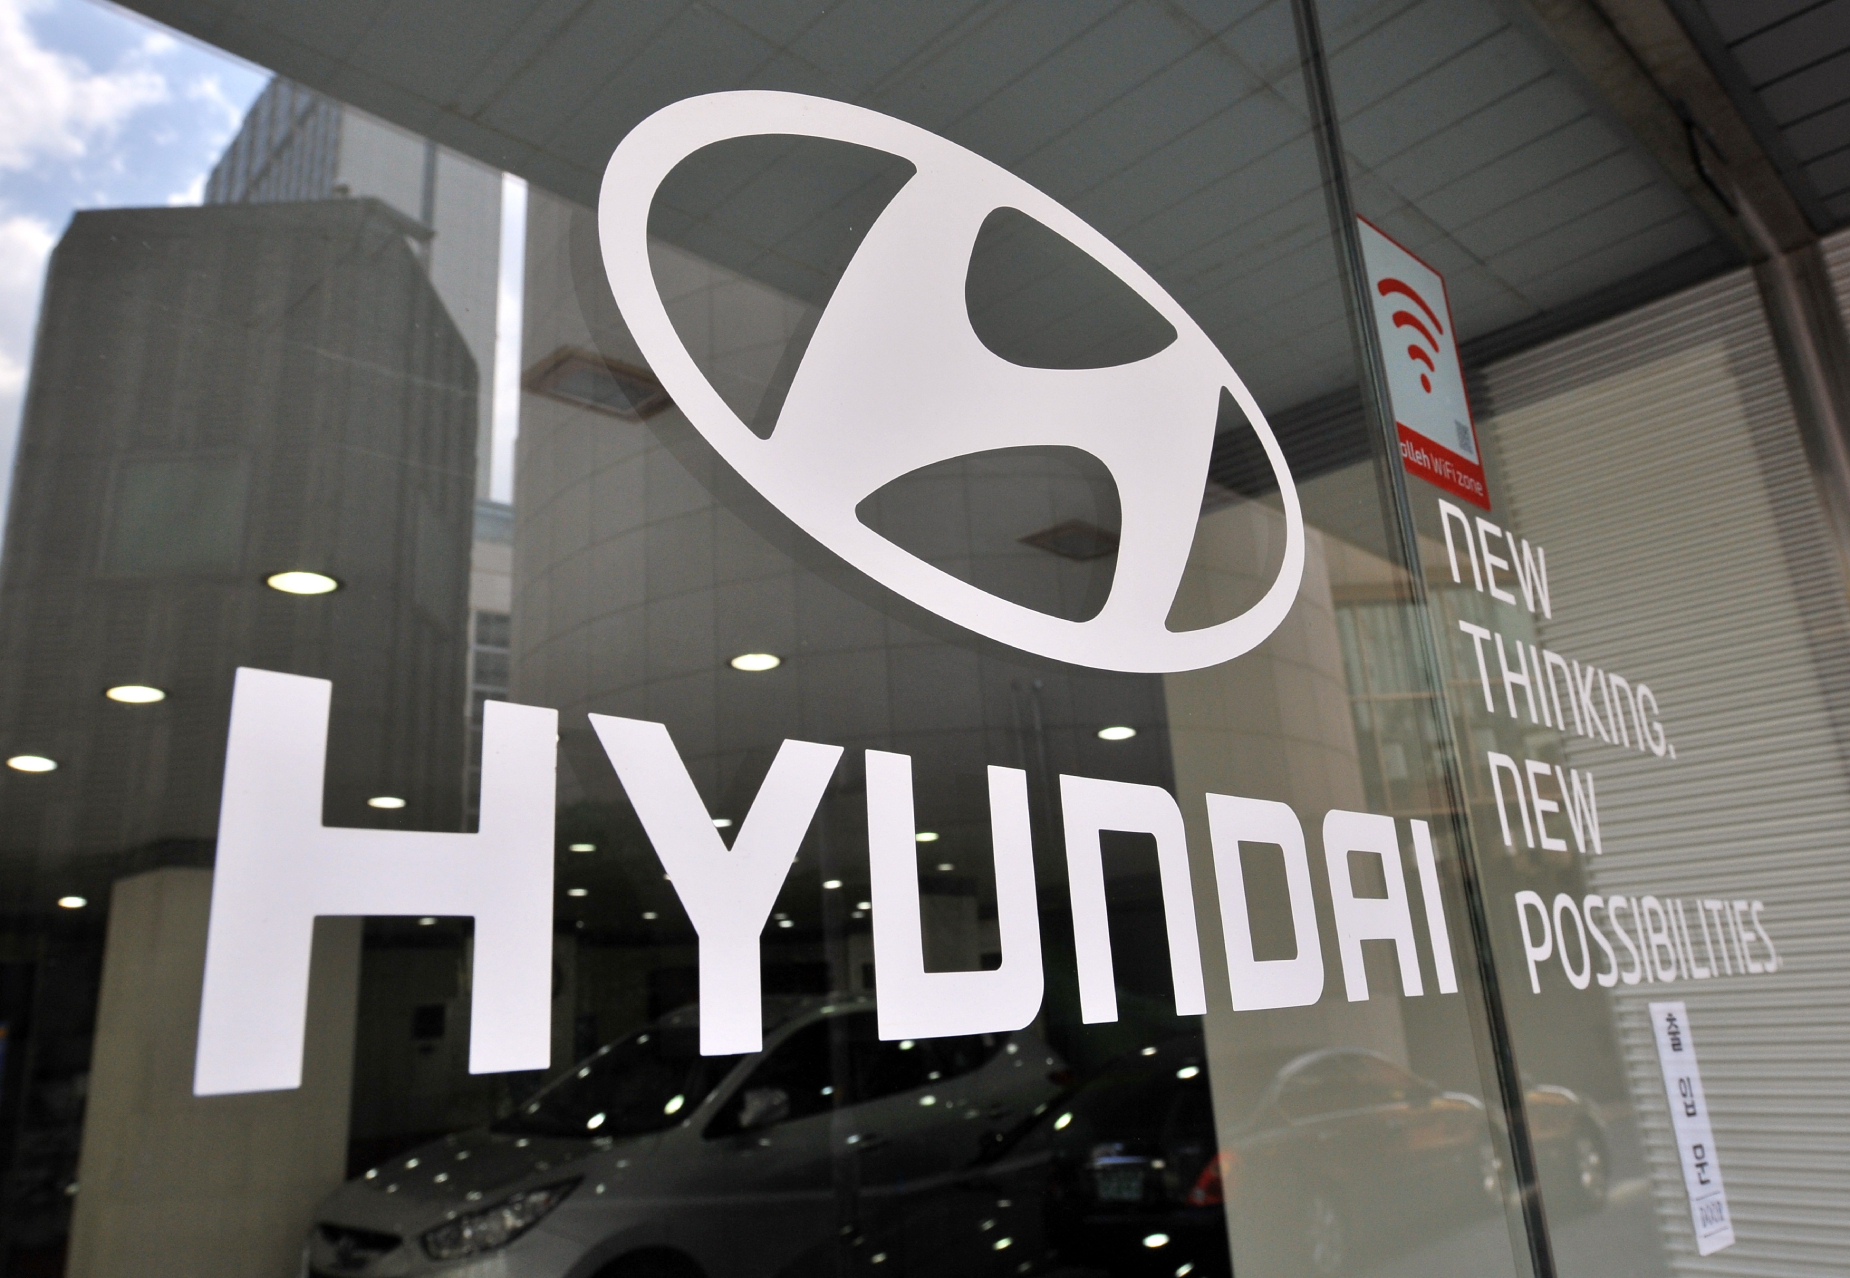 The Hyundai logo printed on a window